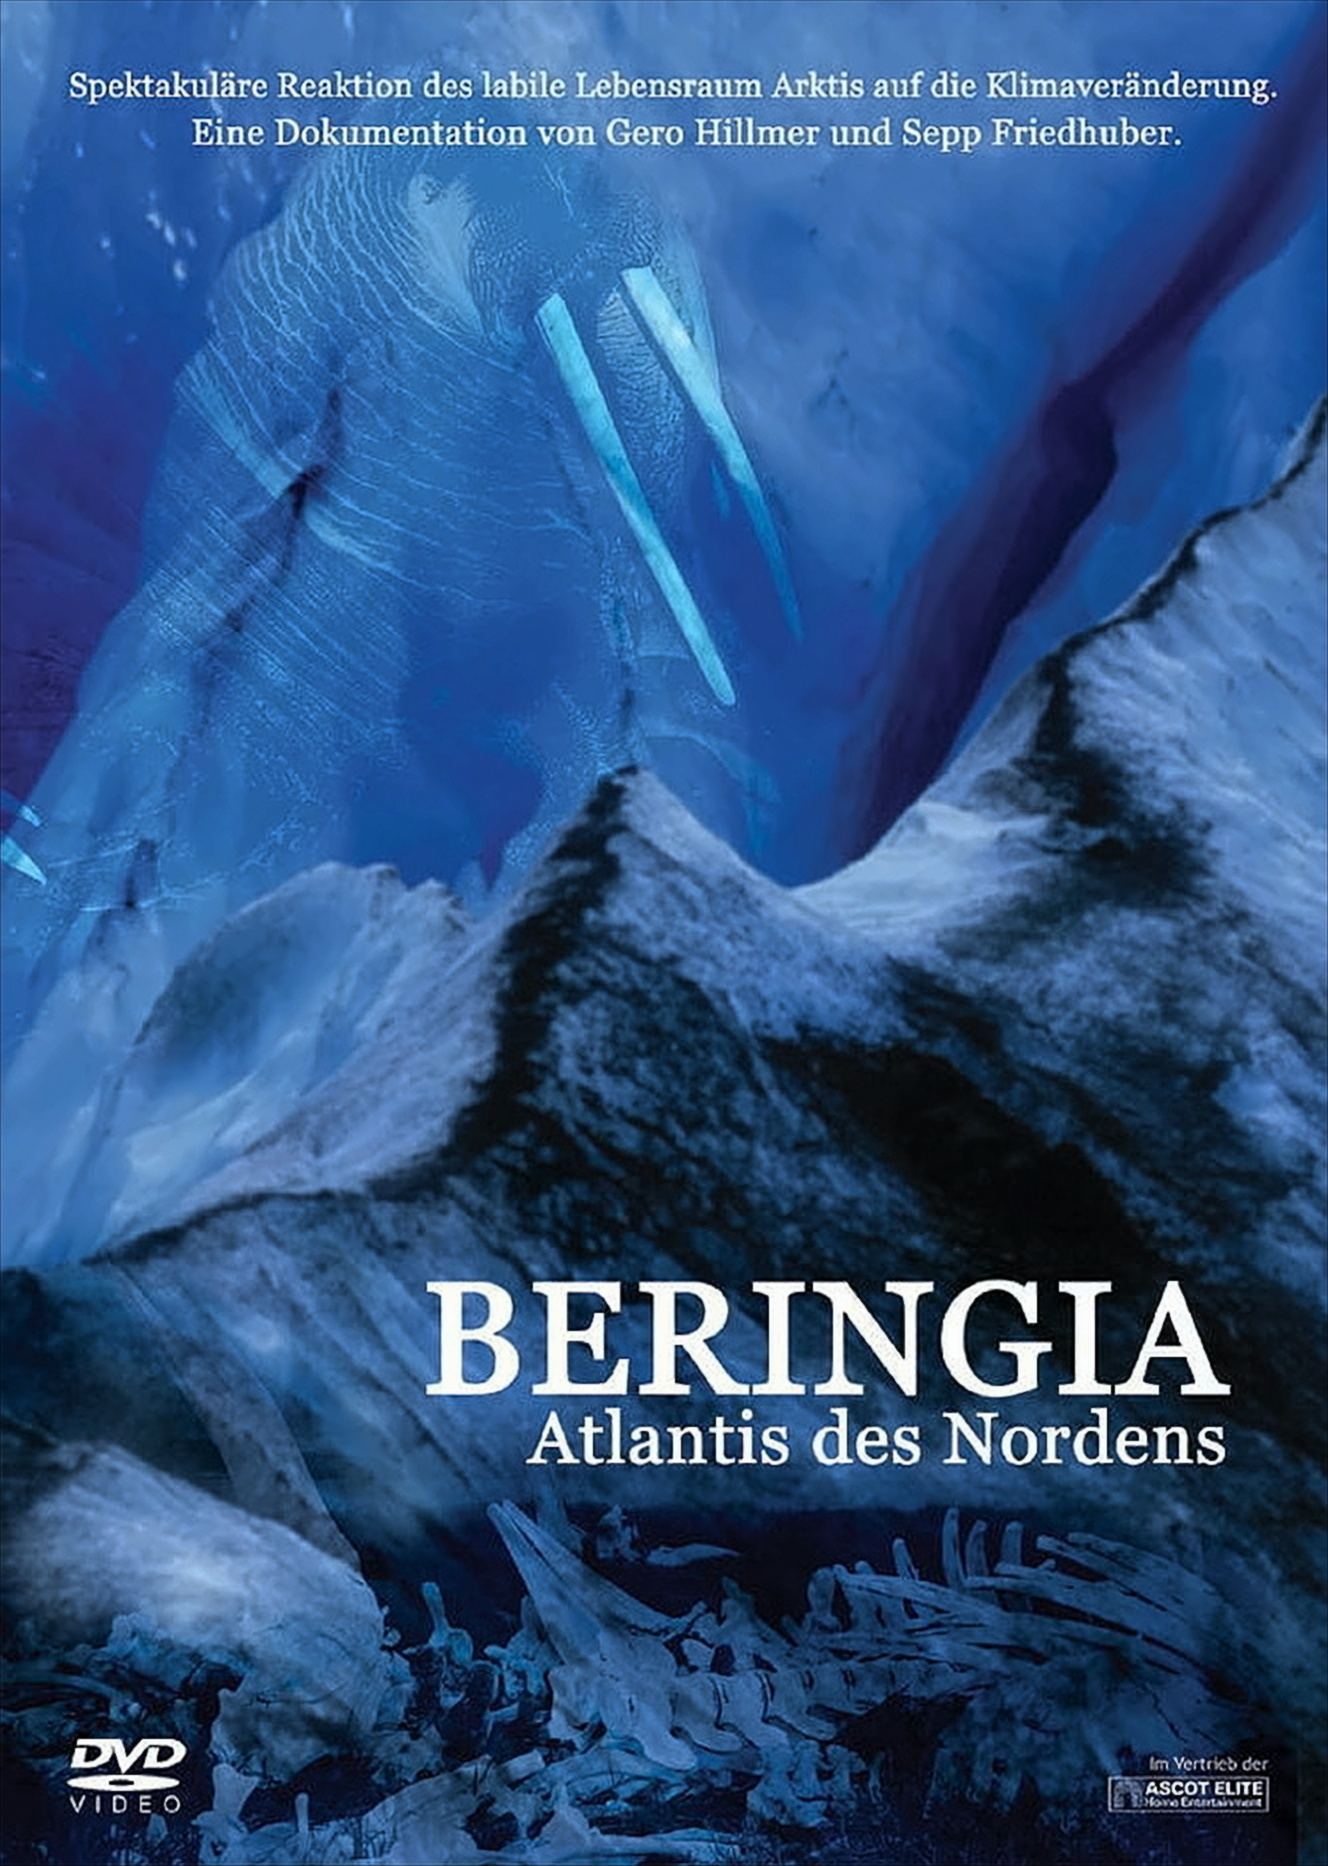 Nordens - Atlantis DVD des Beringia